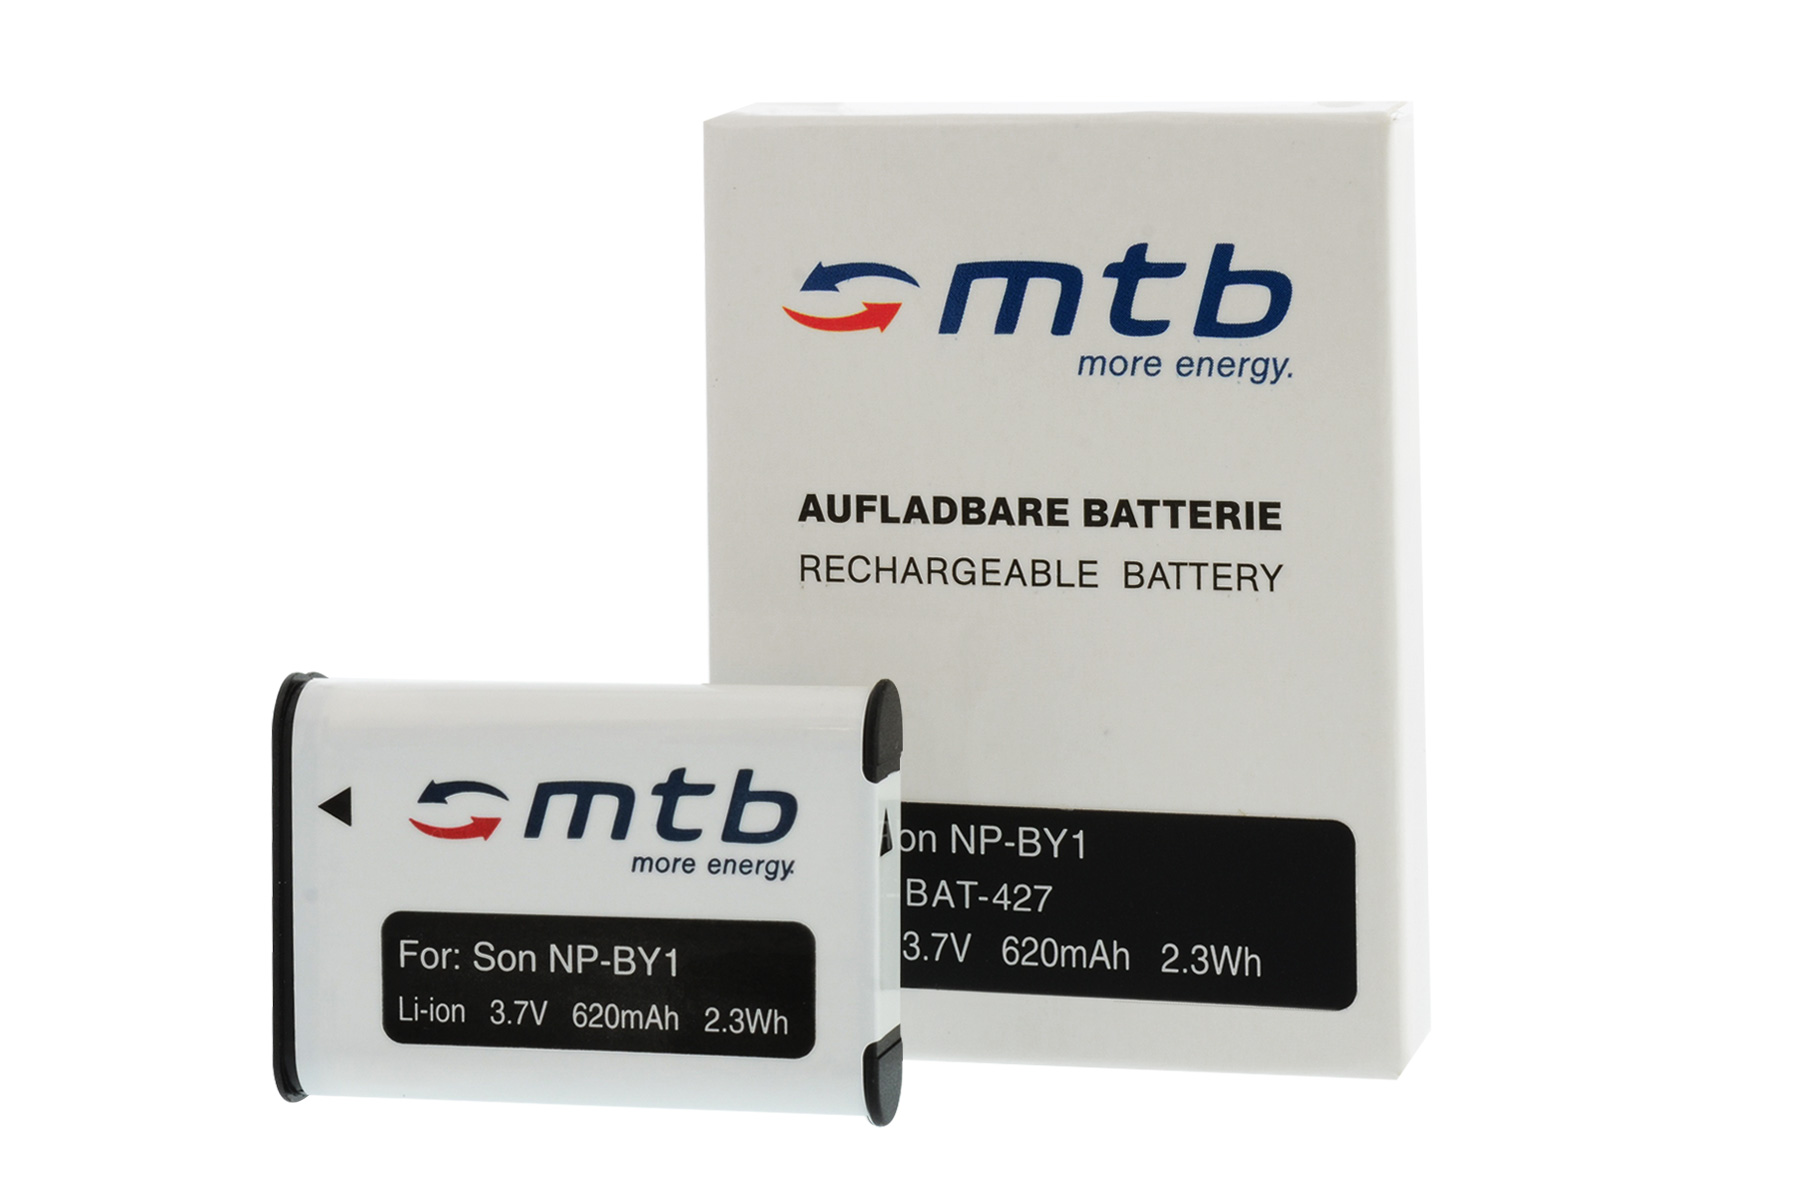 MTB MORE ENERGY 2x BAT-427 Li-Ion, mAh NP-BY1 Akku, 620